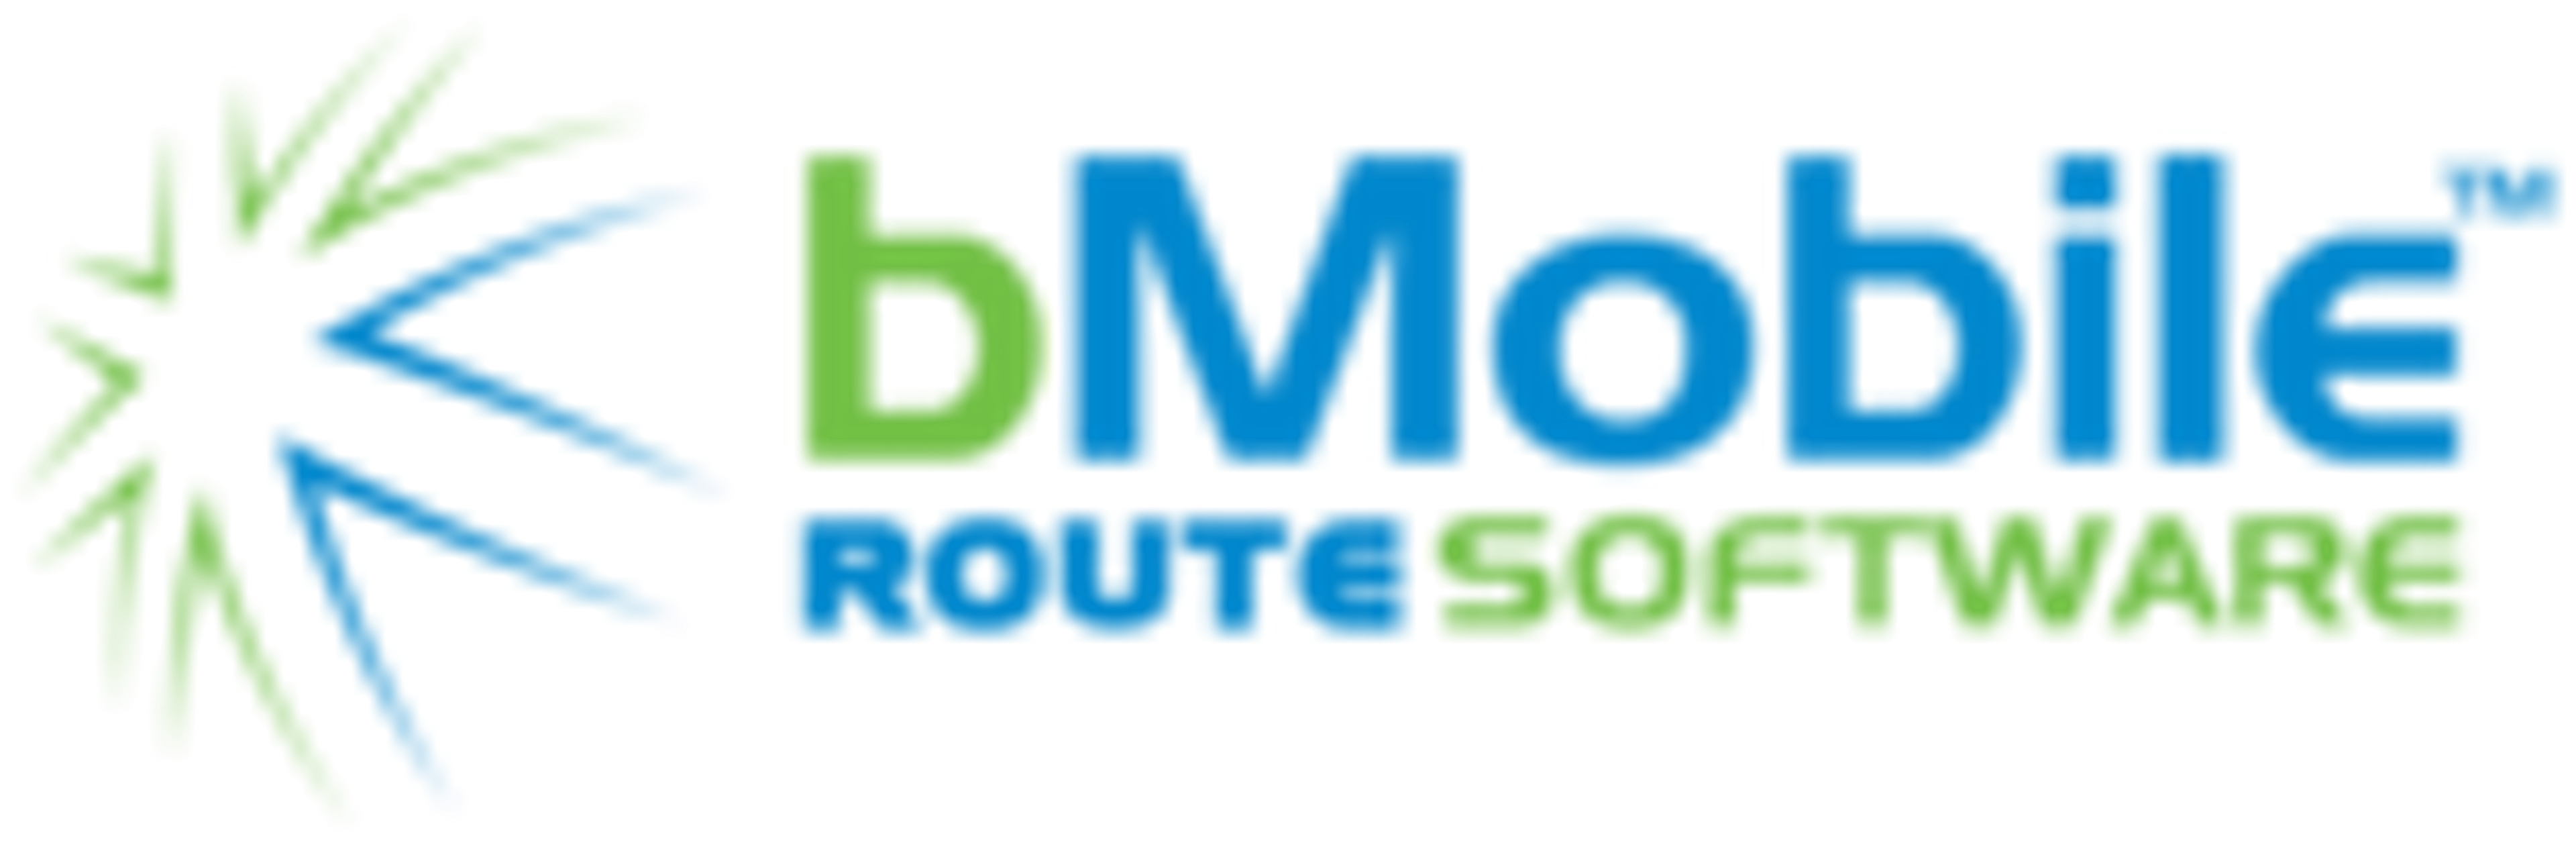 bMobile Order Management Logo